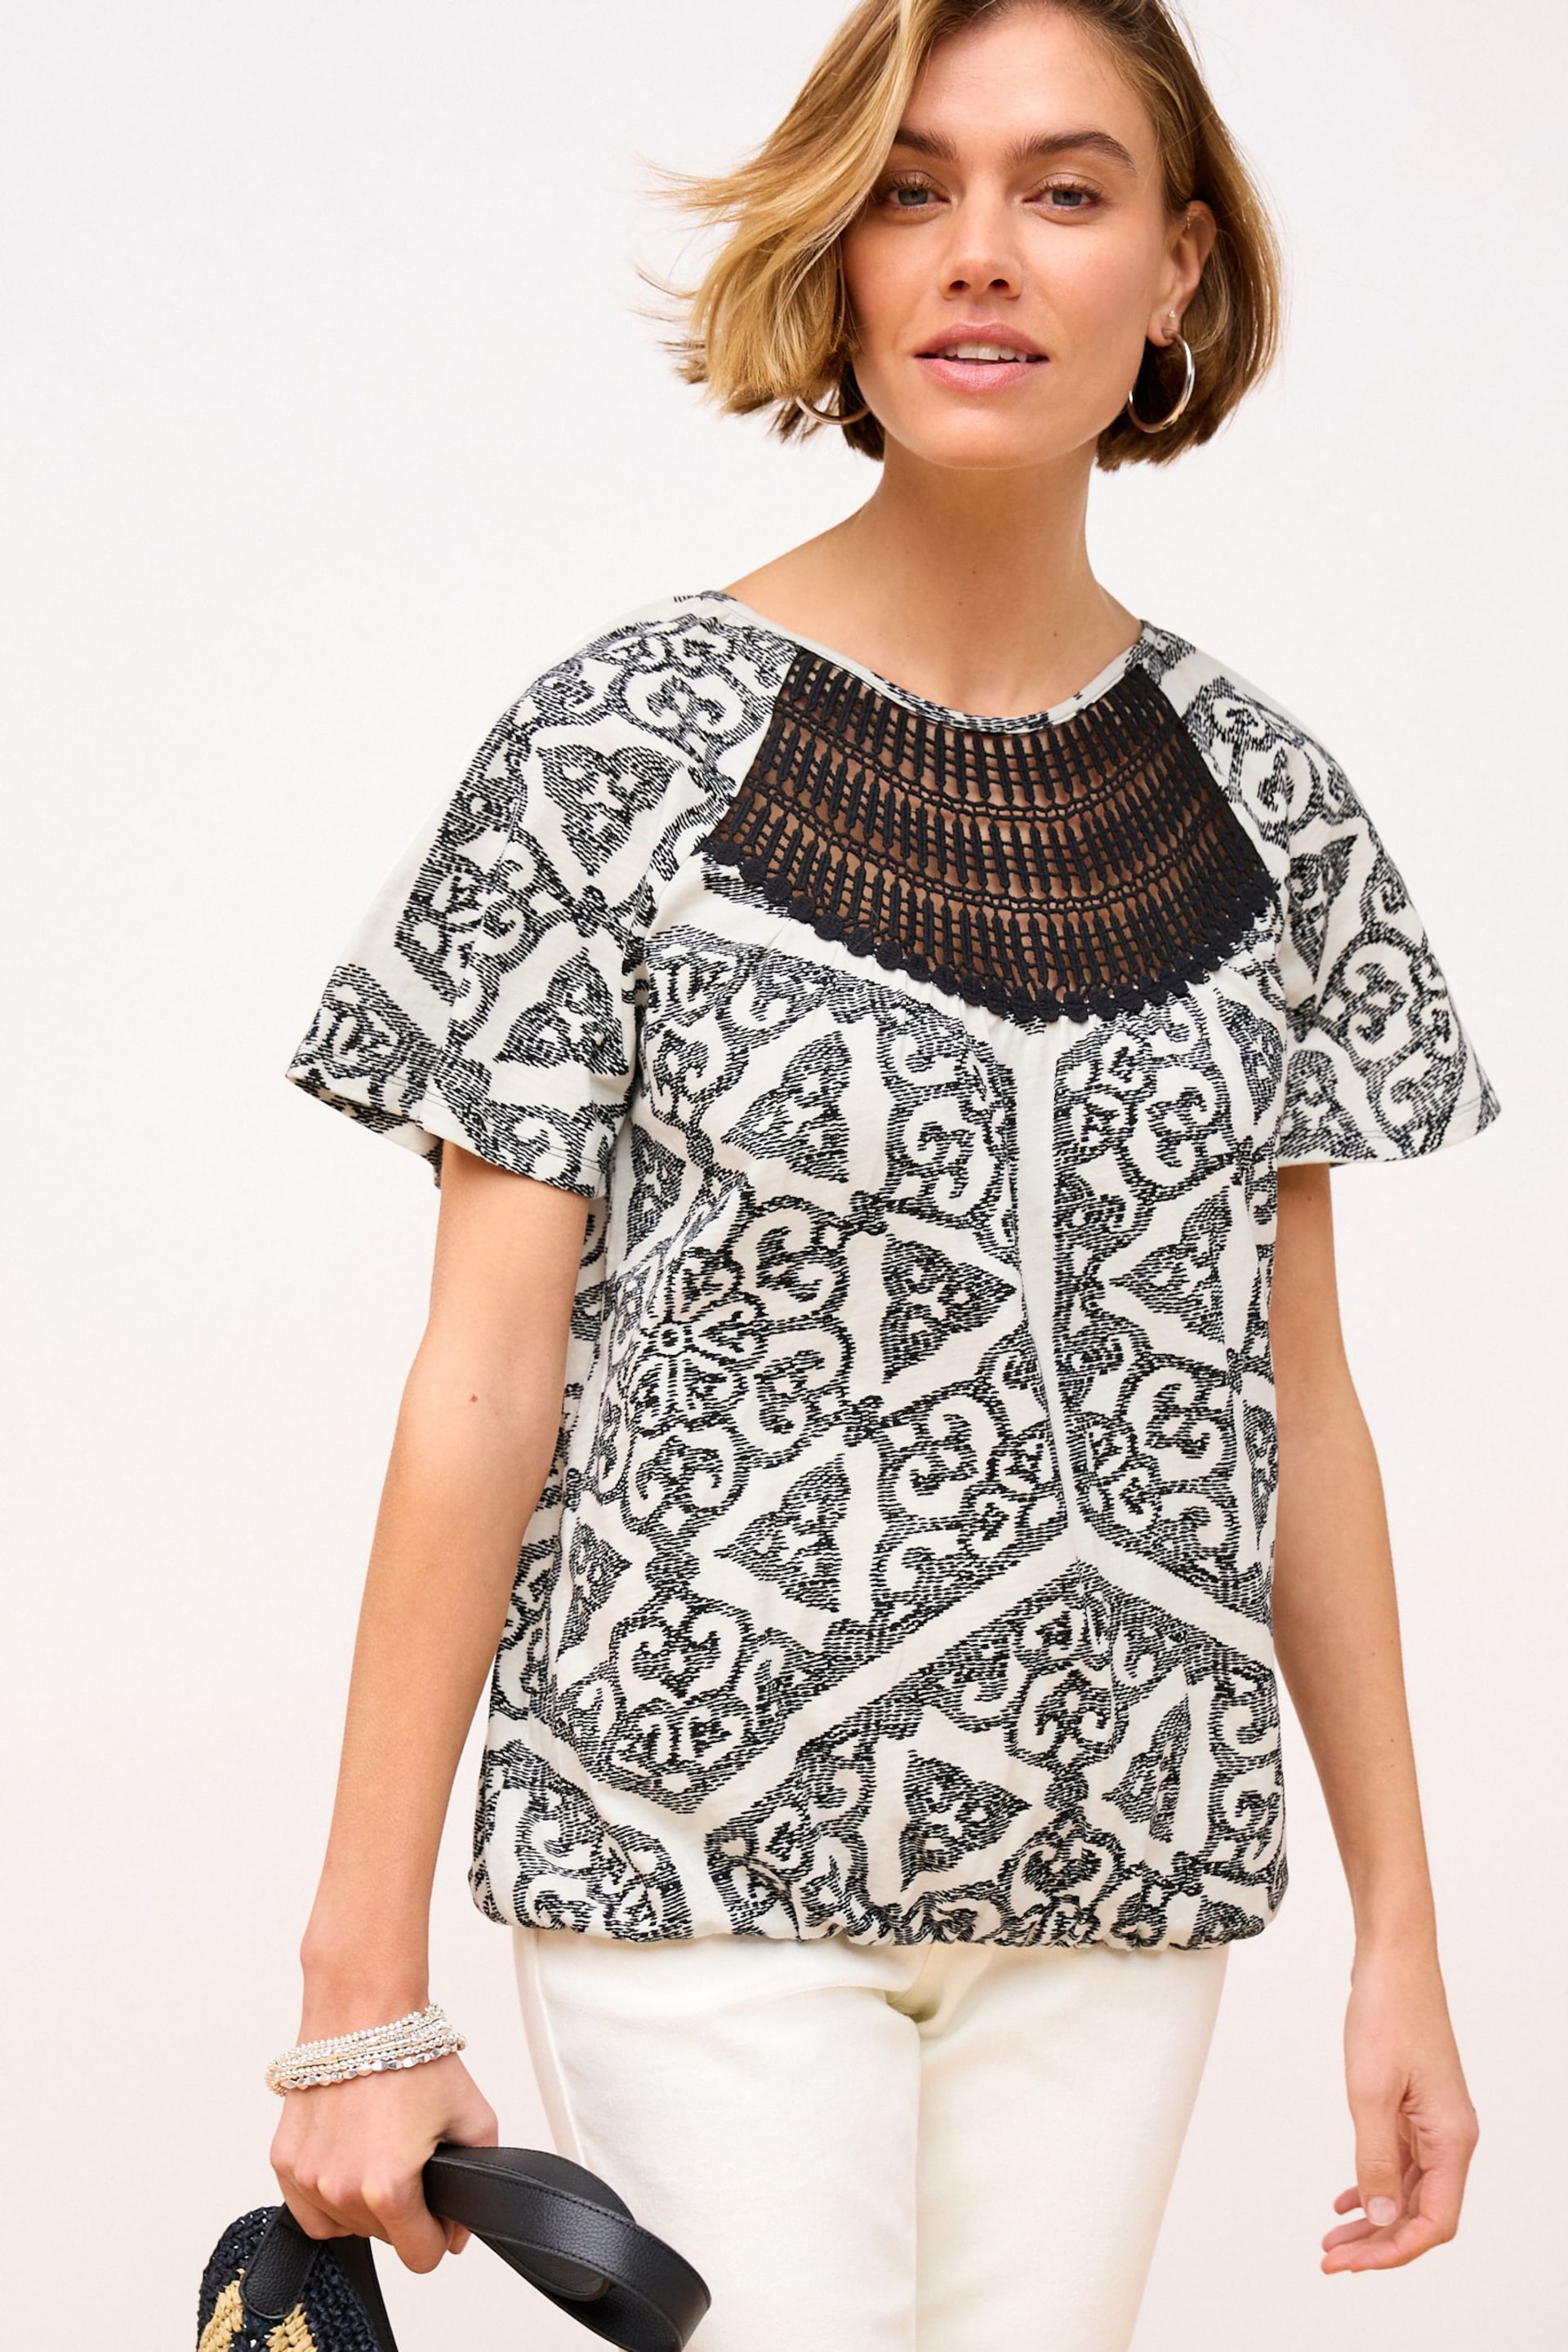 Black/White Print Short Sleeve Crochet Bubblehem Top - Image 1 of 6